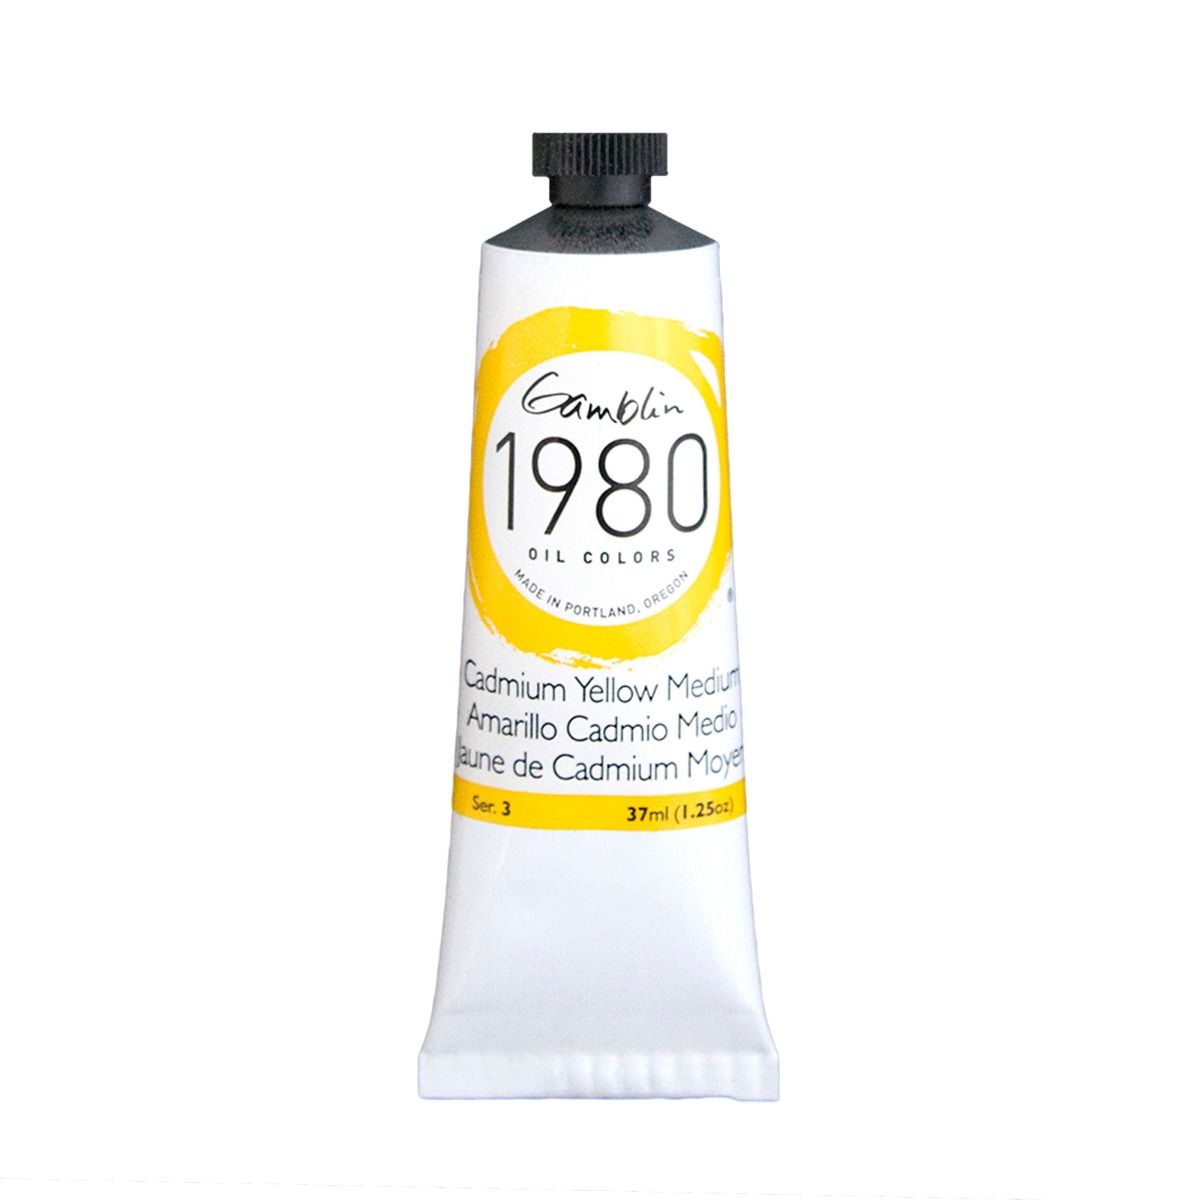 Gamblin 1980 Oils - Cadmium Yellow Medium, 37 ml (1.25oz)